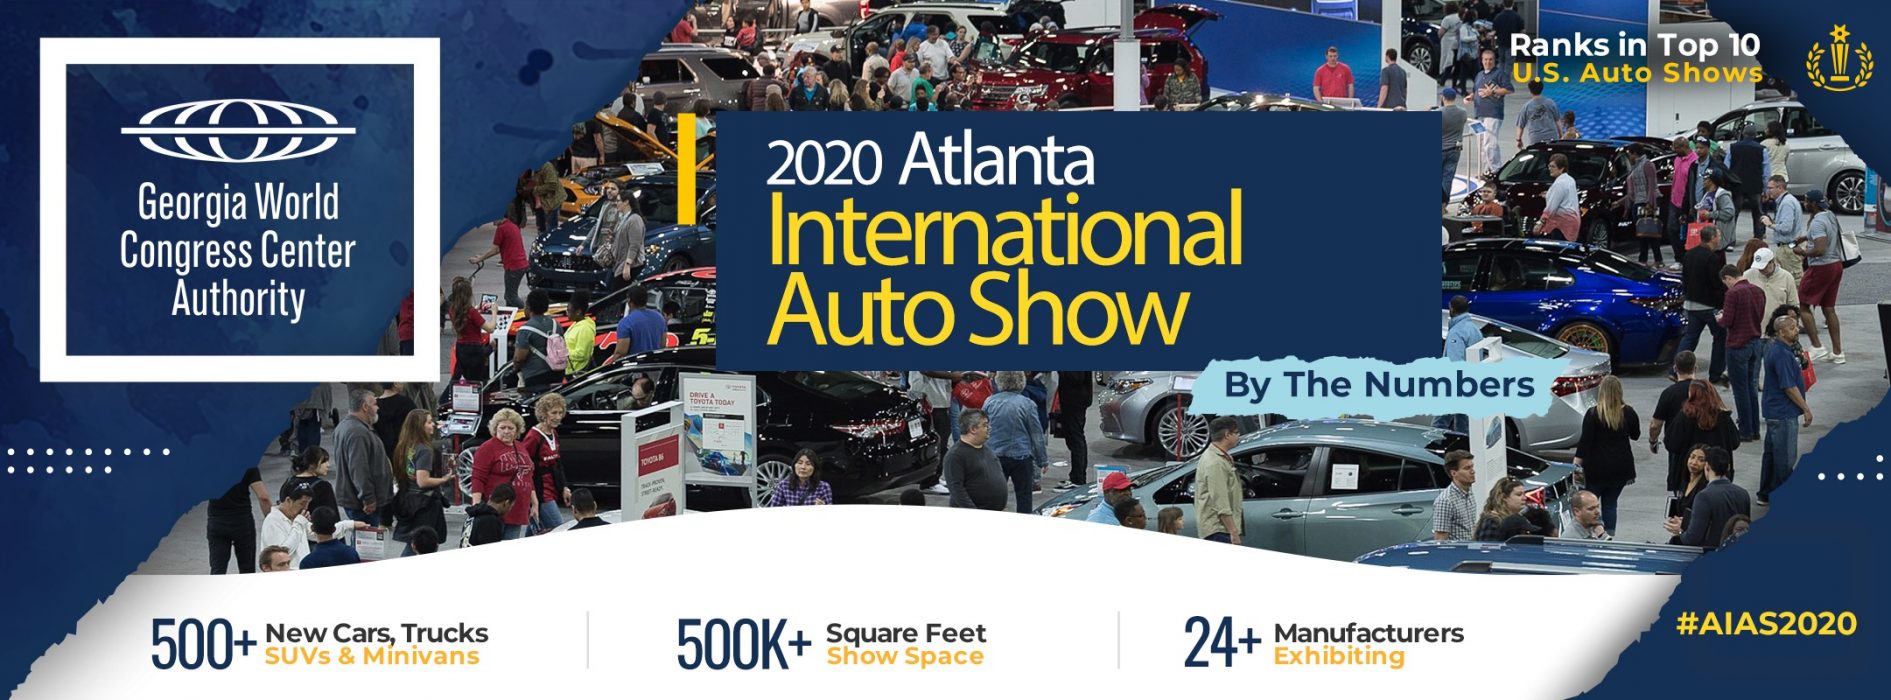 Tuesday Talk Getting revved up for Atlanta International Auto Show